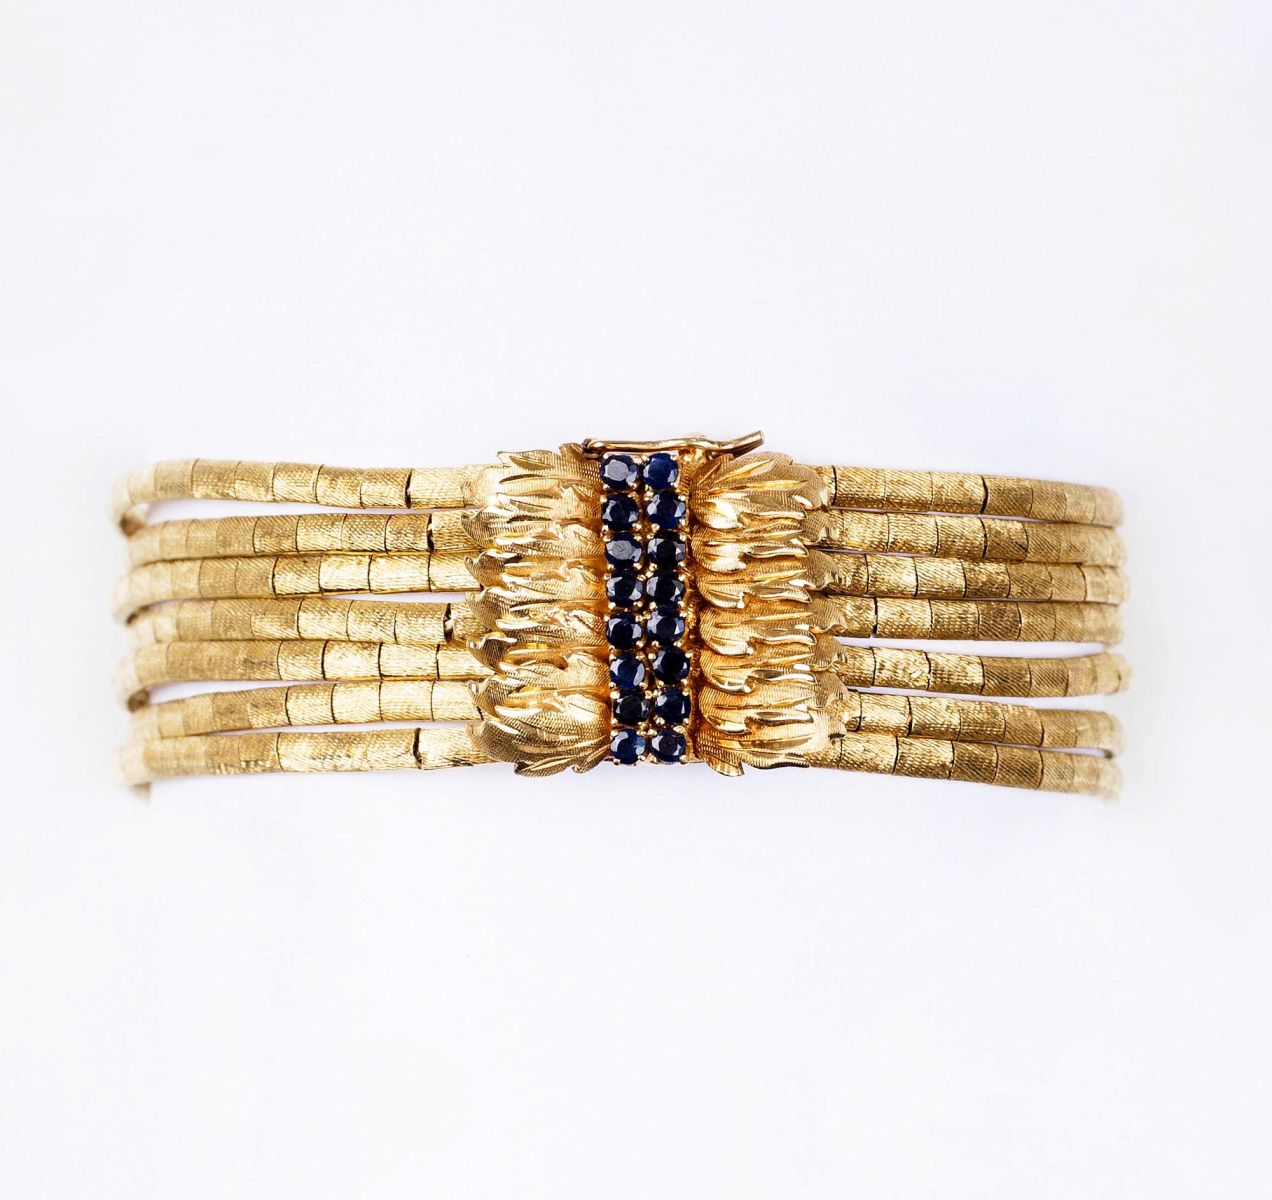 A Vintage Gold Bracelet with Sapphire Clasp